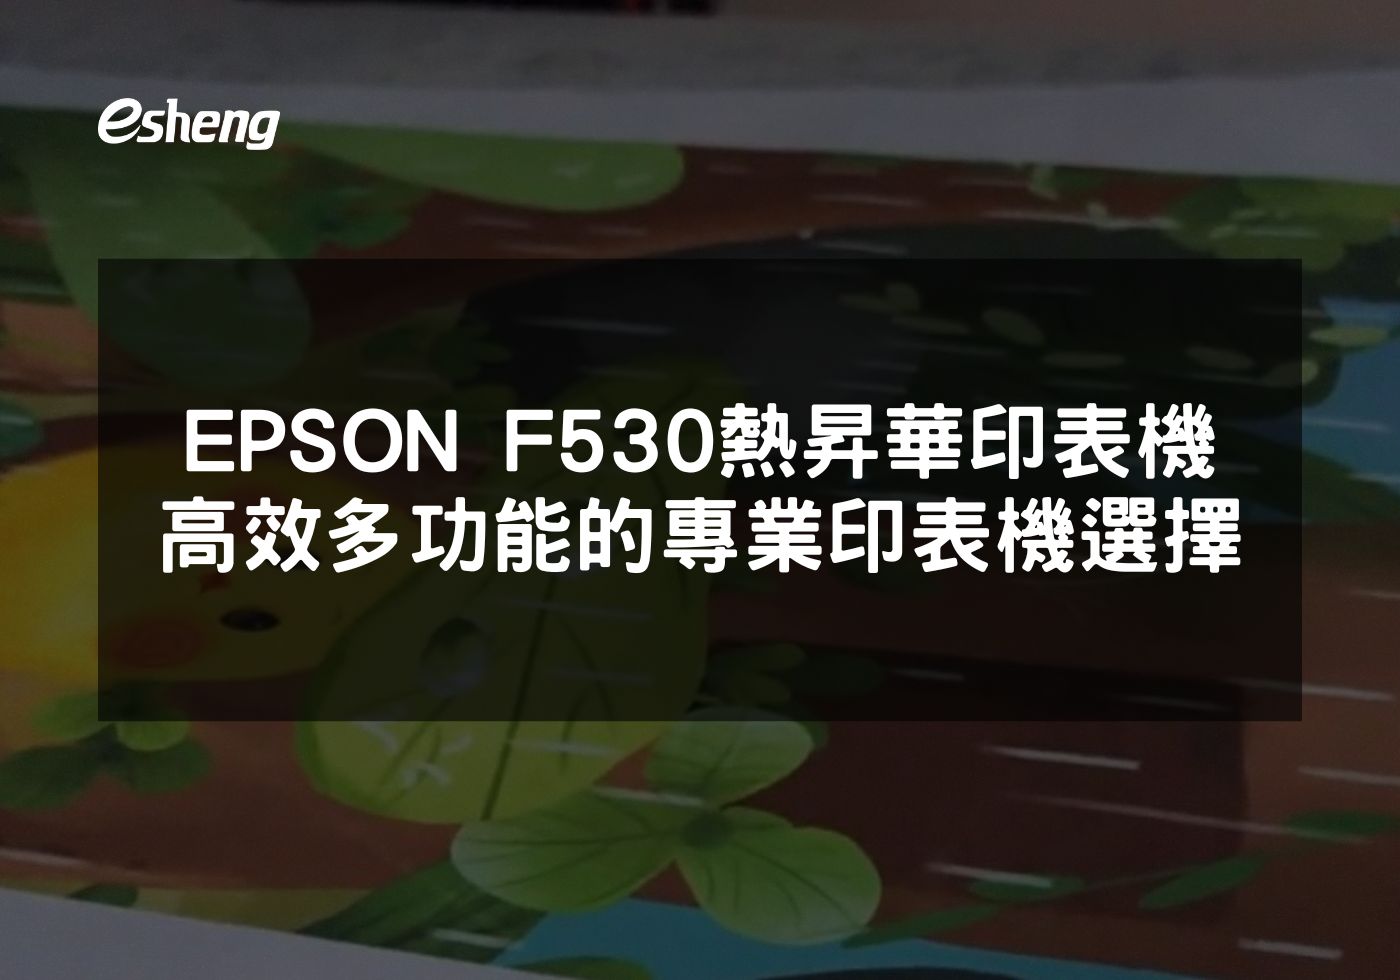 EPSON F530熱昇華印表機提升商業印刷效率與品質